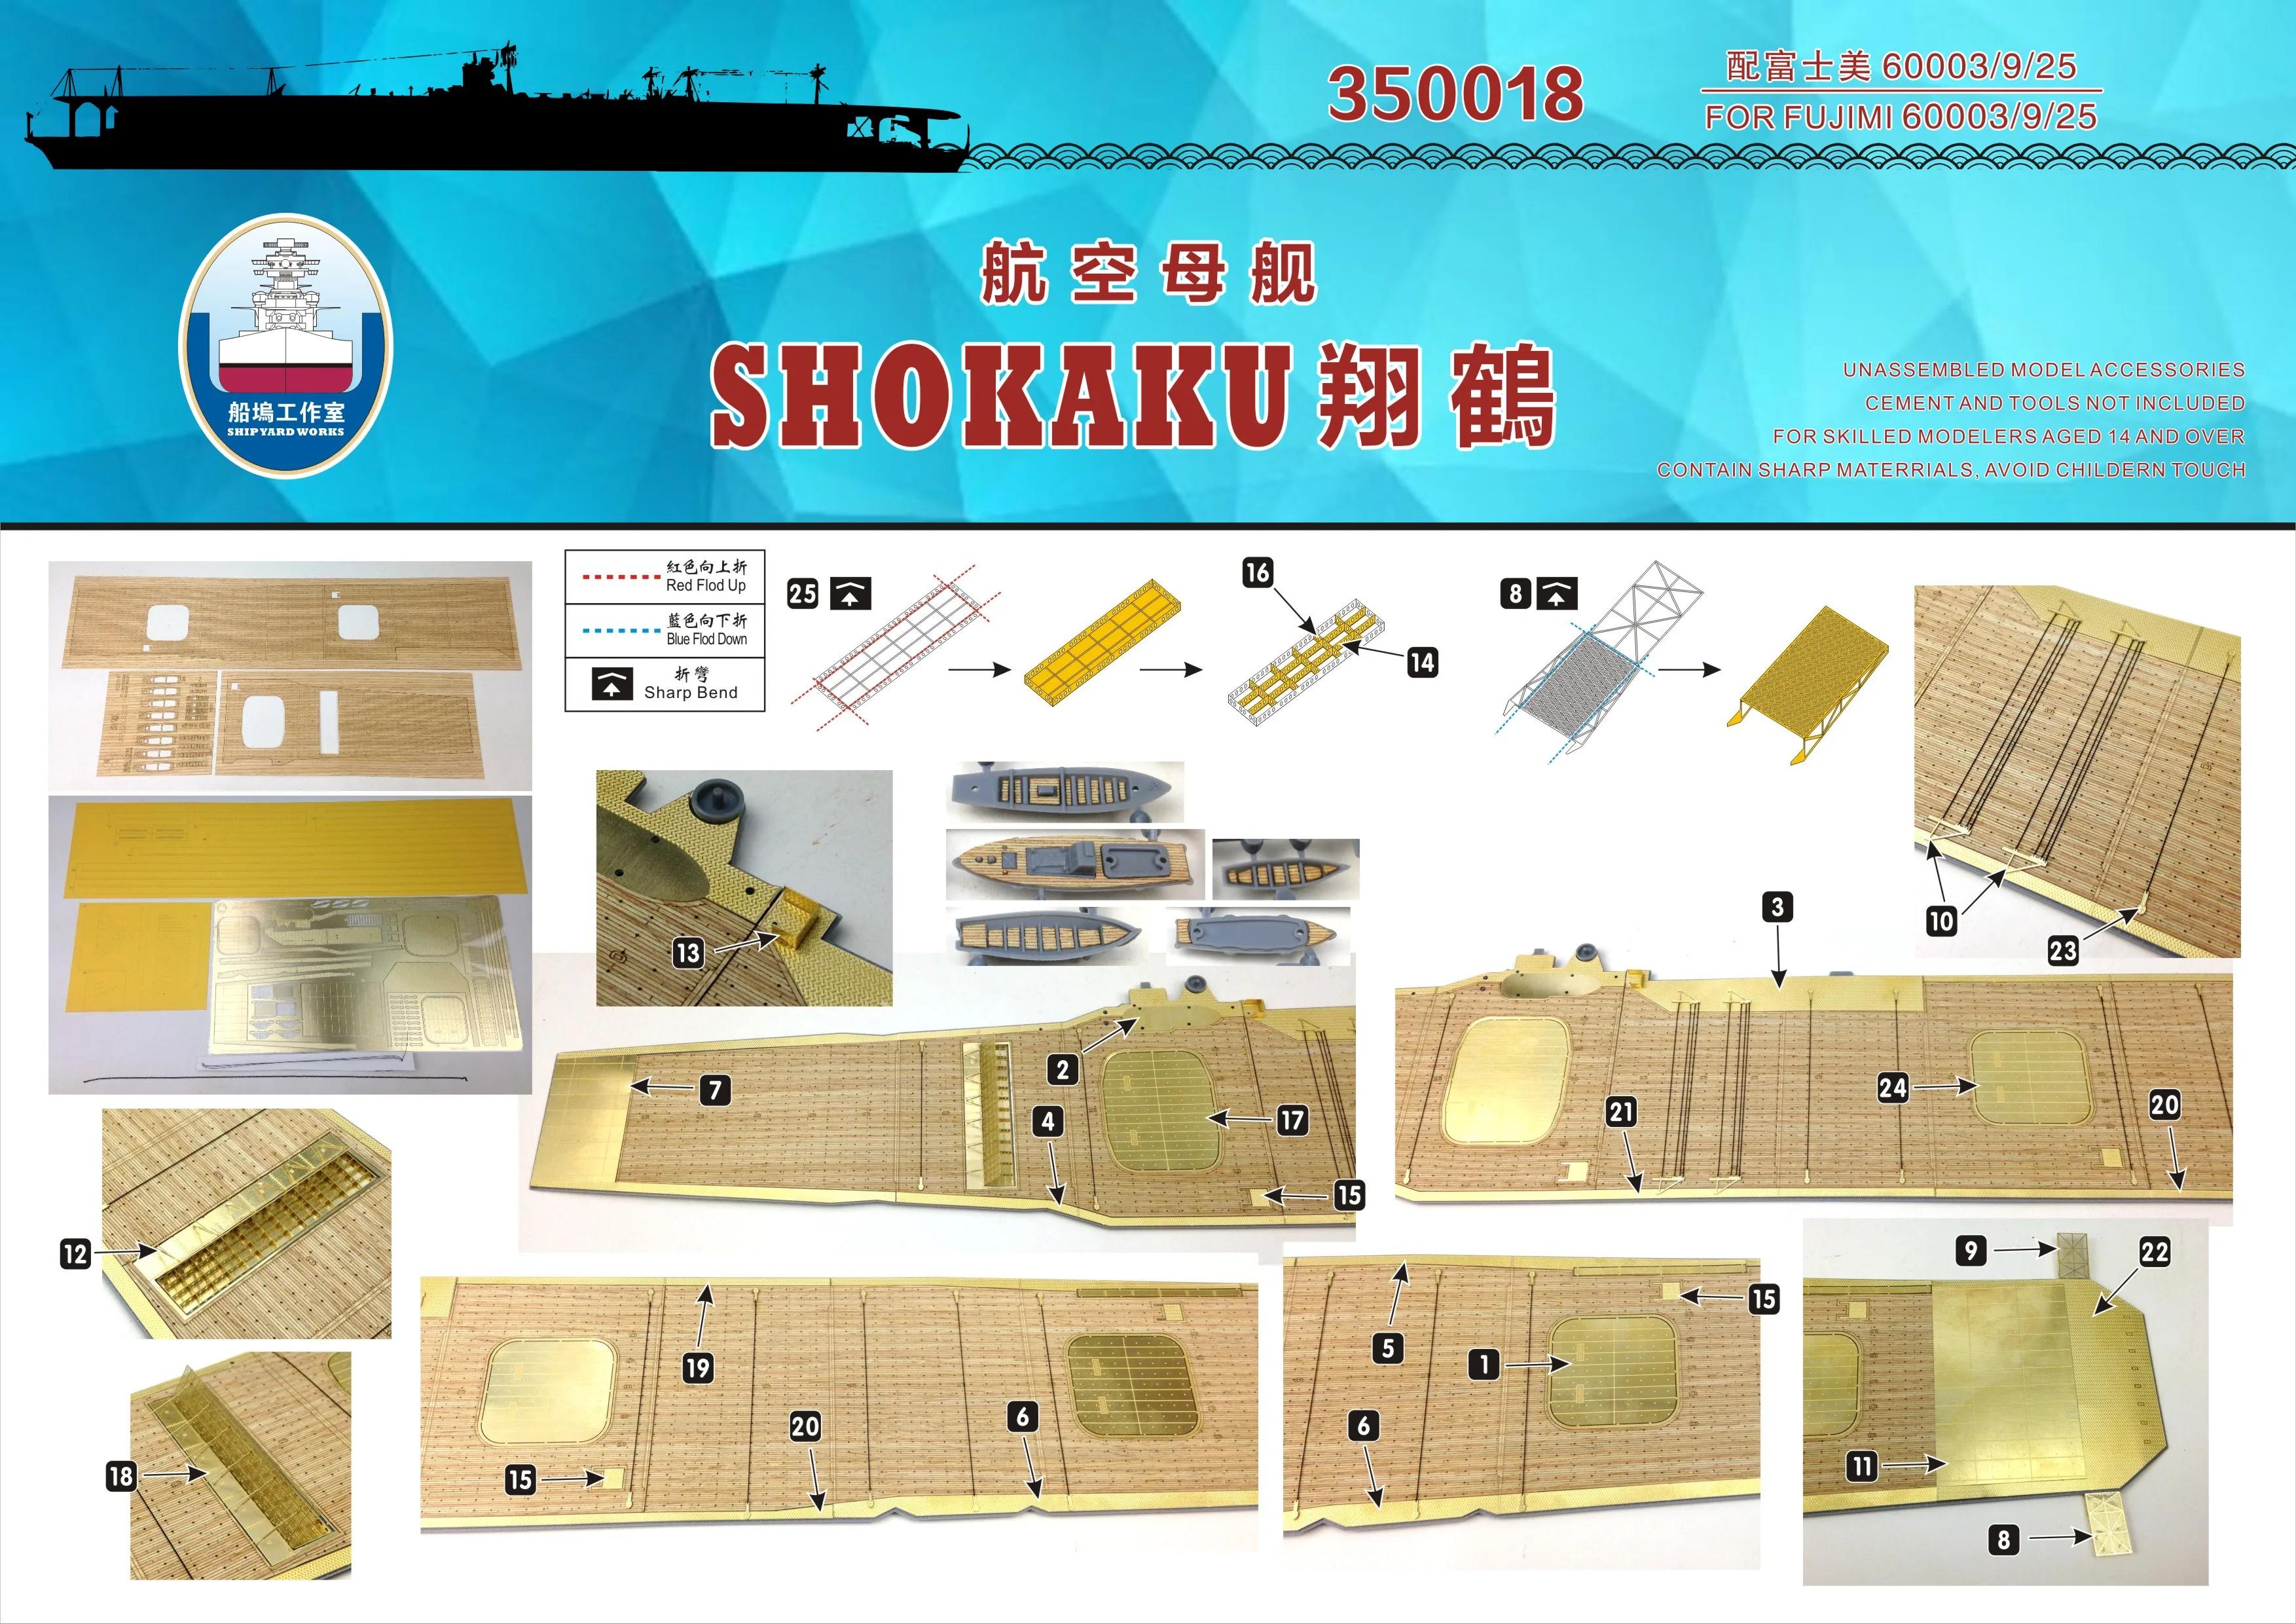 Shipyardworks 350018 1/350 Wood Deck IJN Shokaku for Fujimi 60003 60009 60025